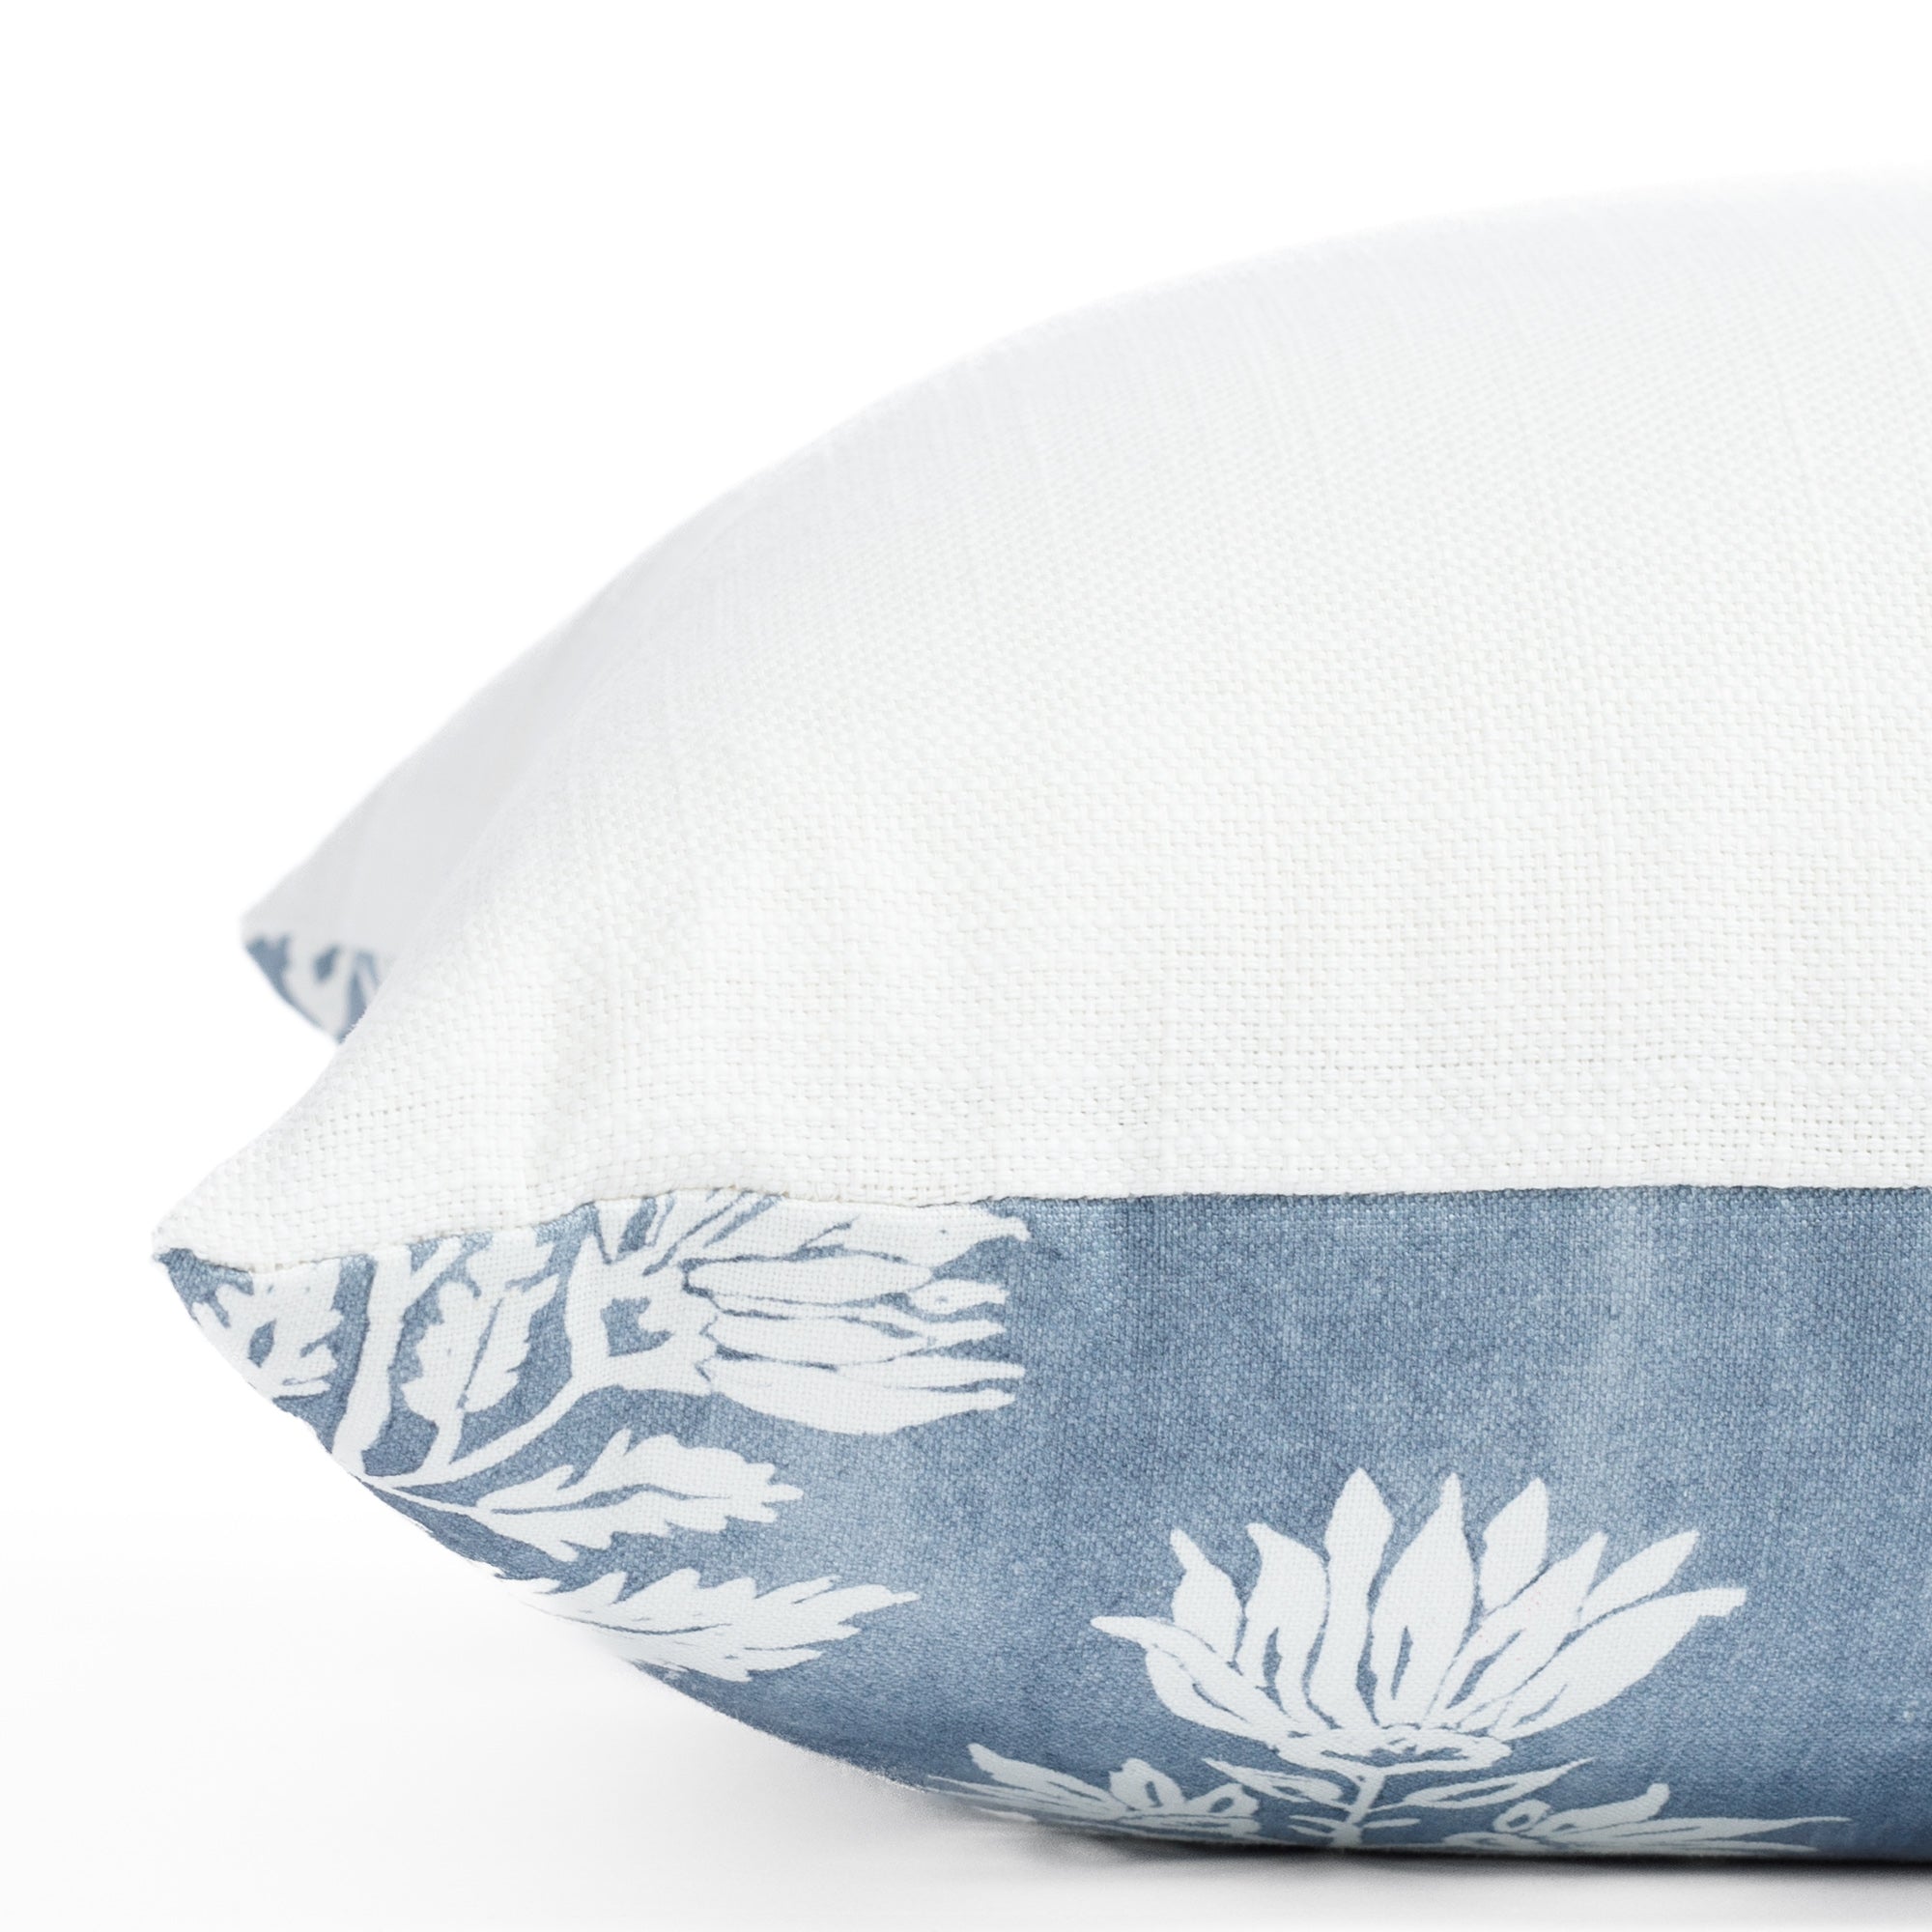  an indigo blue and white batik floral print throw pillow : Side detail